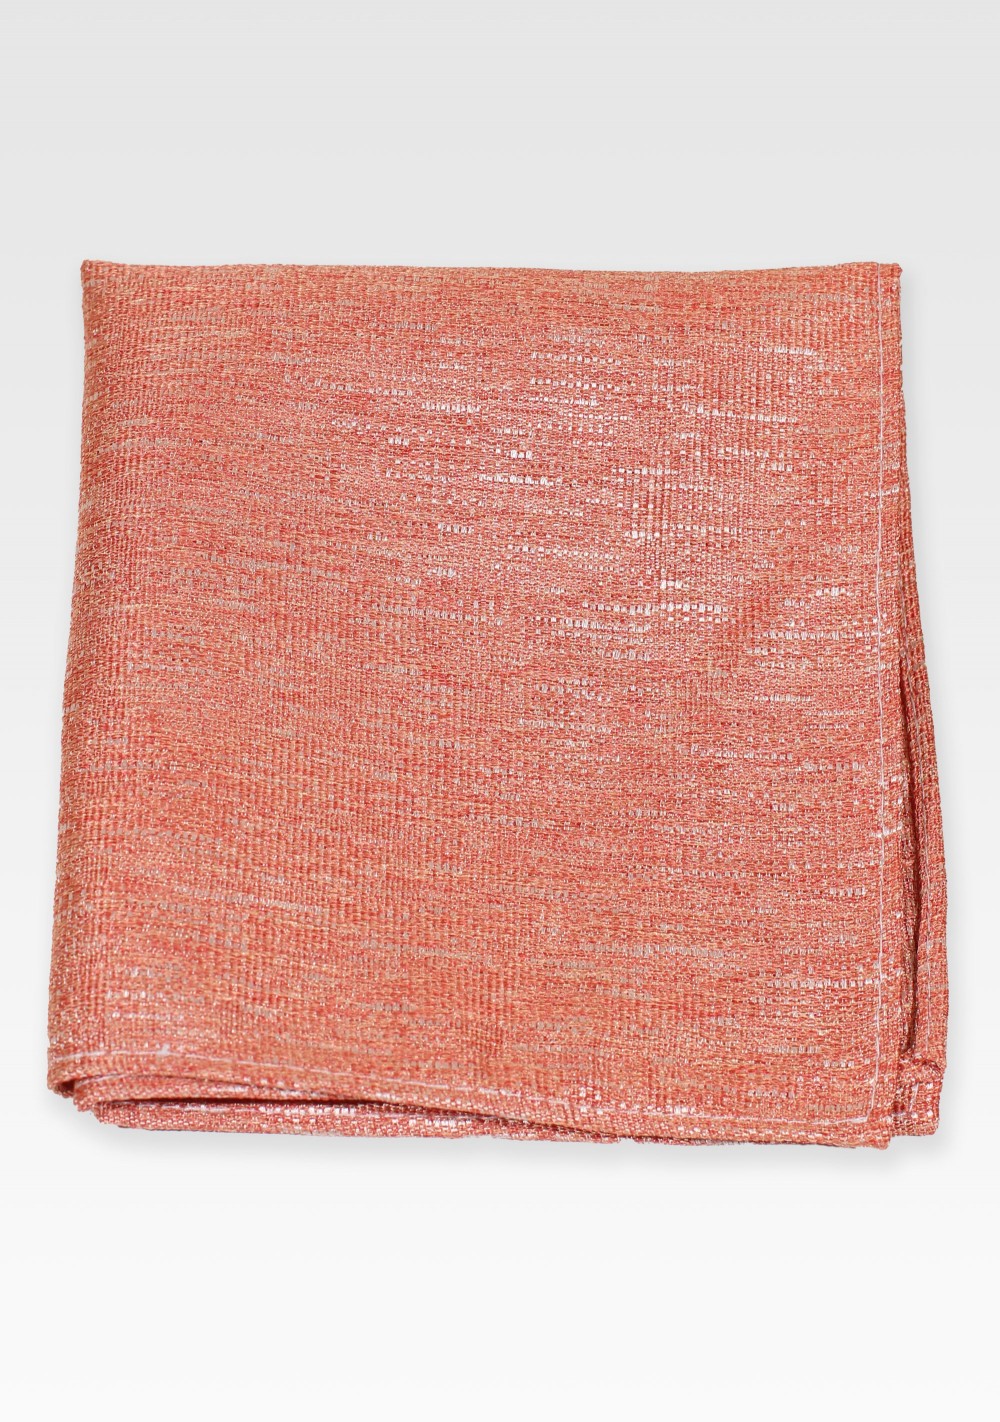 Linen Texture Pocket Square in Sundial Orange